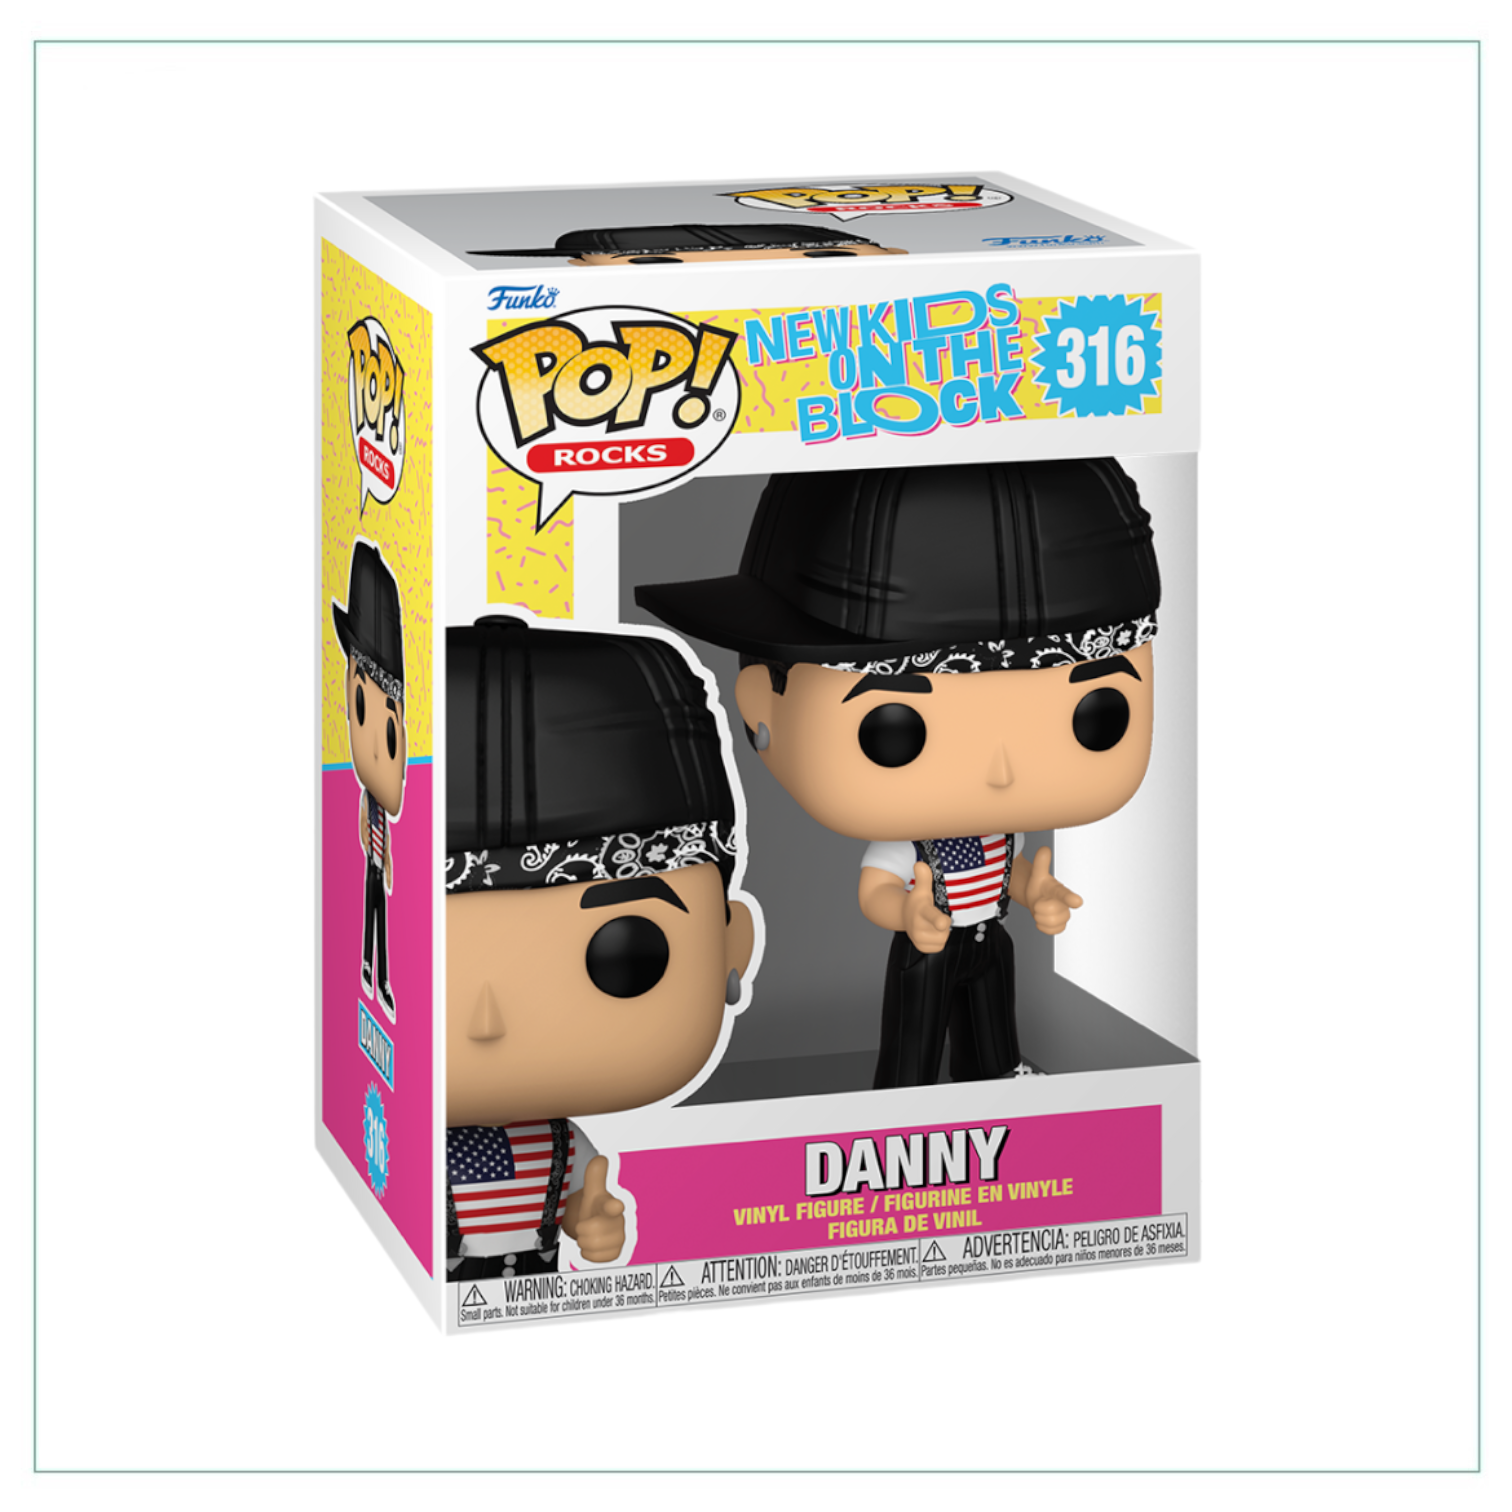 Danny #316 Funko Pop! New Kids on the Block